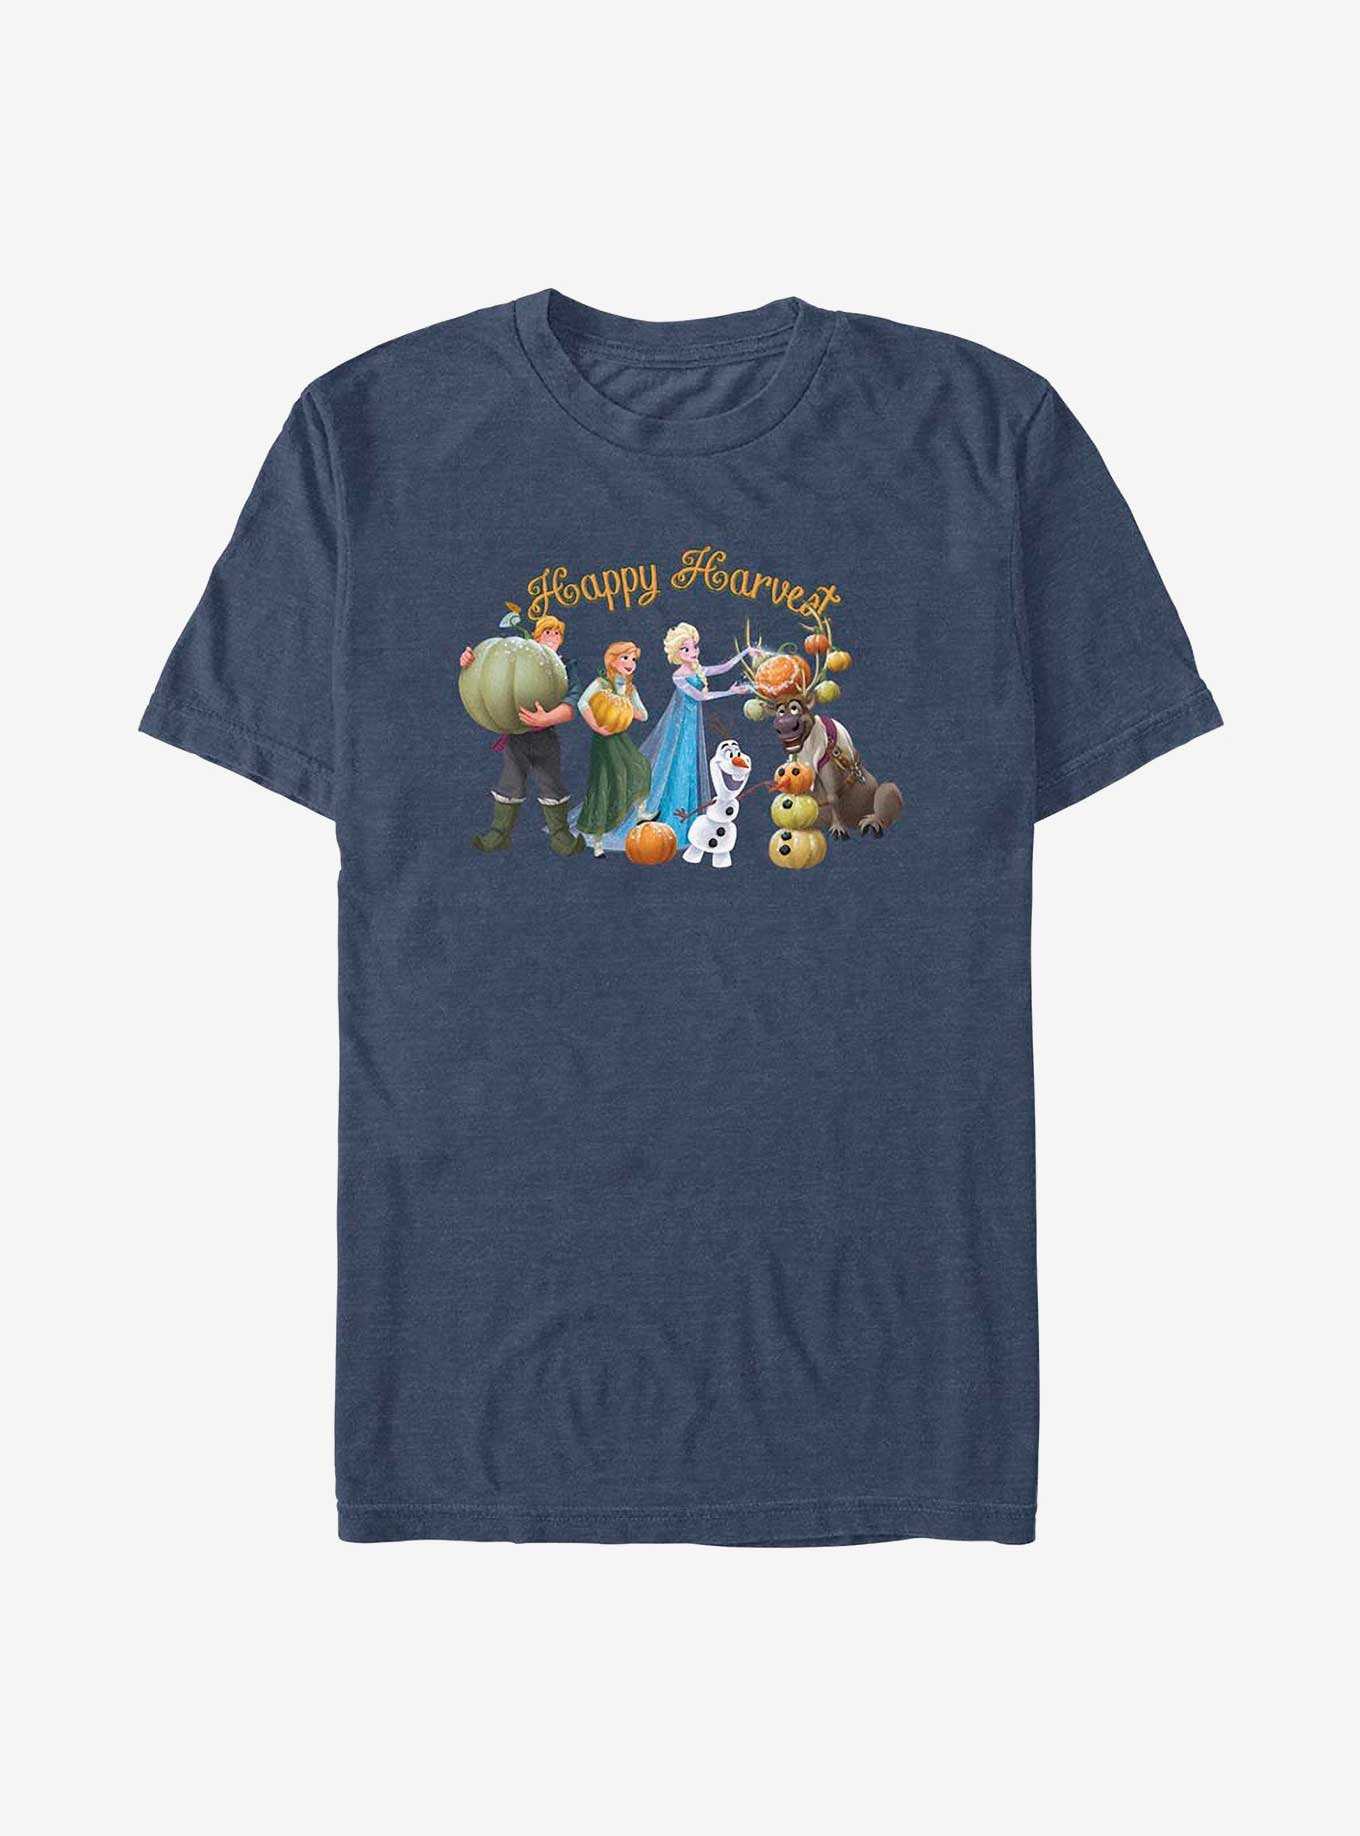 Disney Frozen Harvest Group T-Shirt, , hi-res